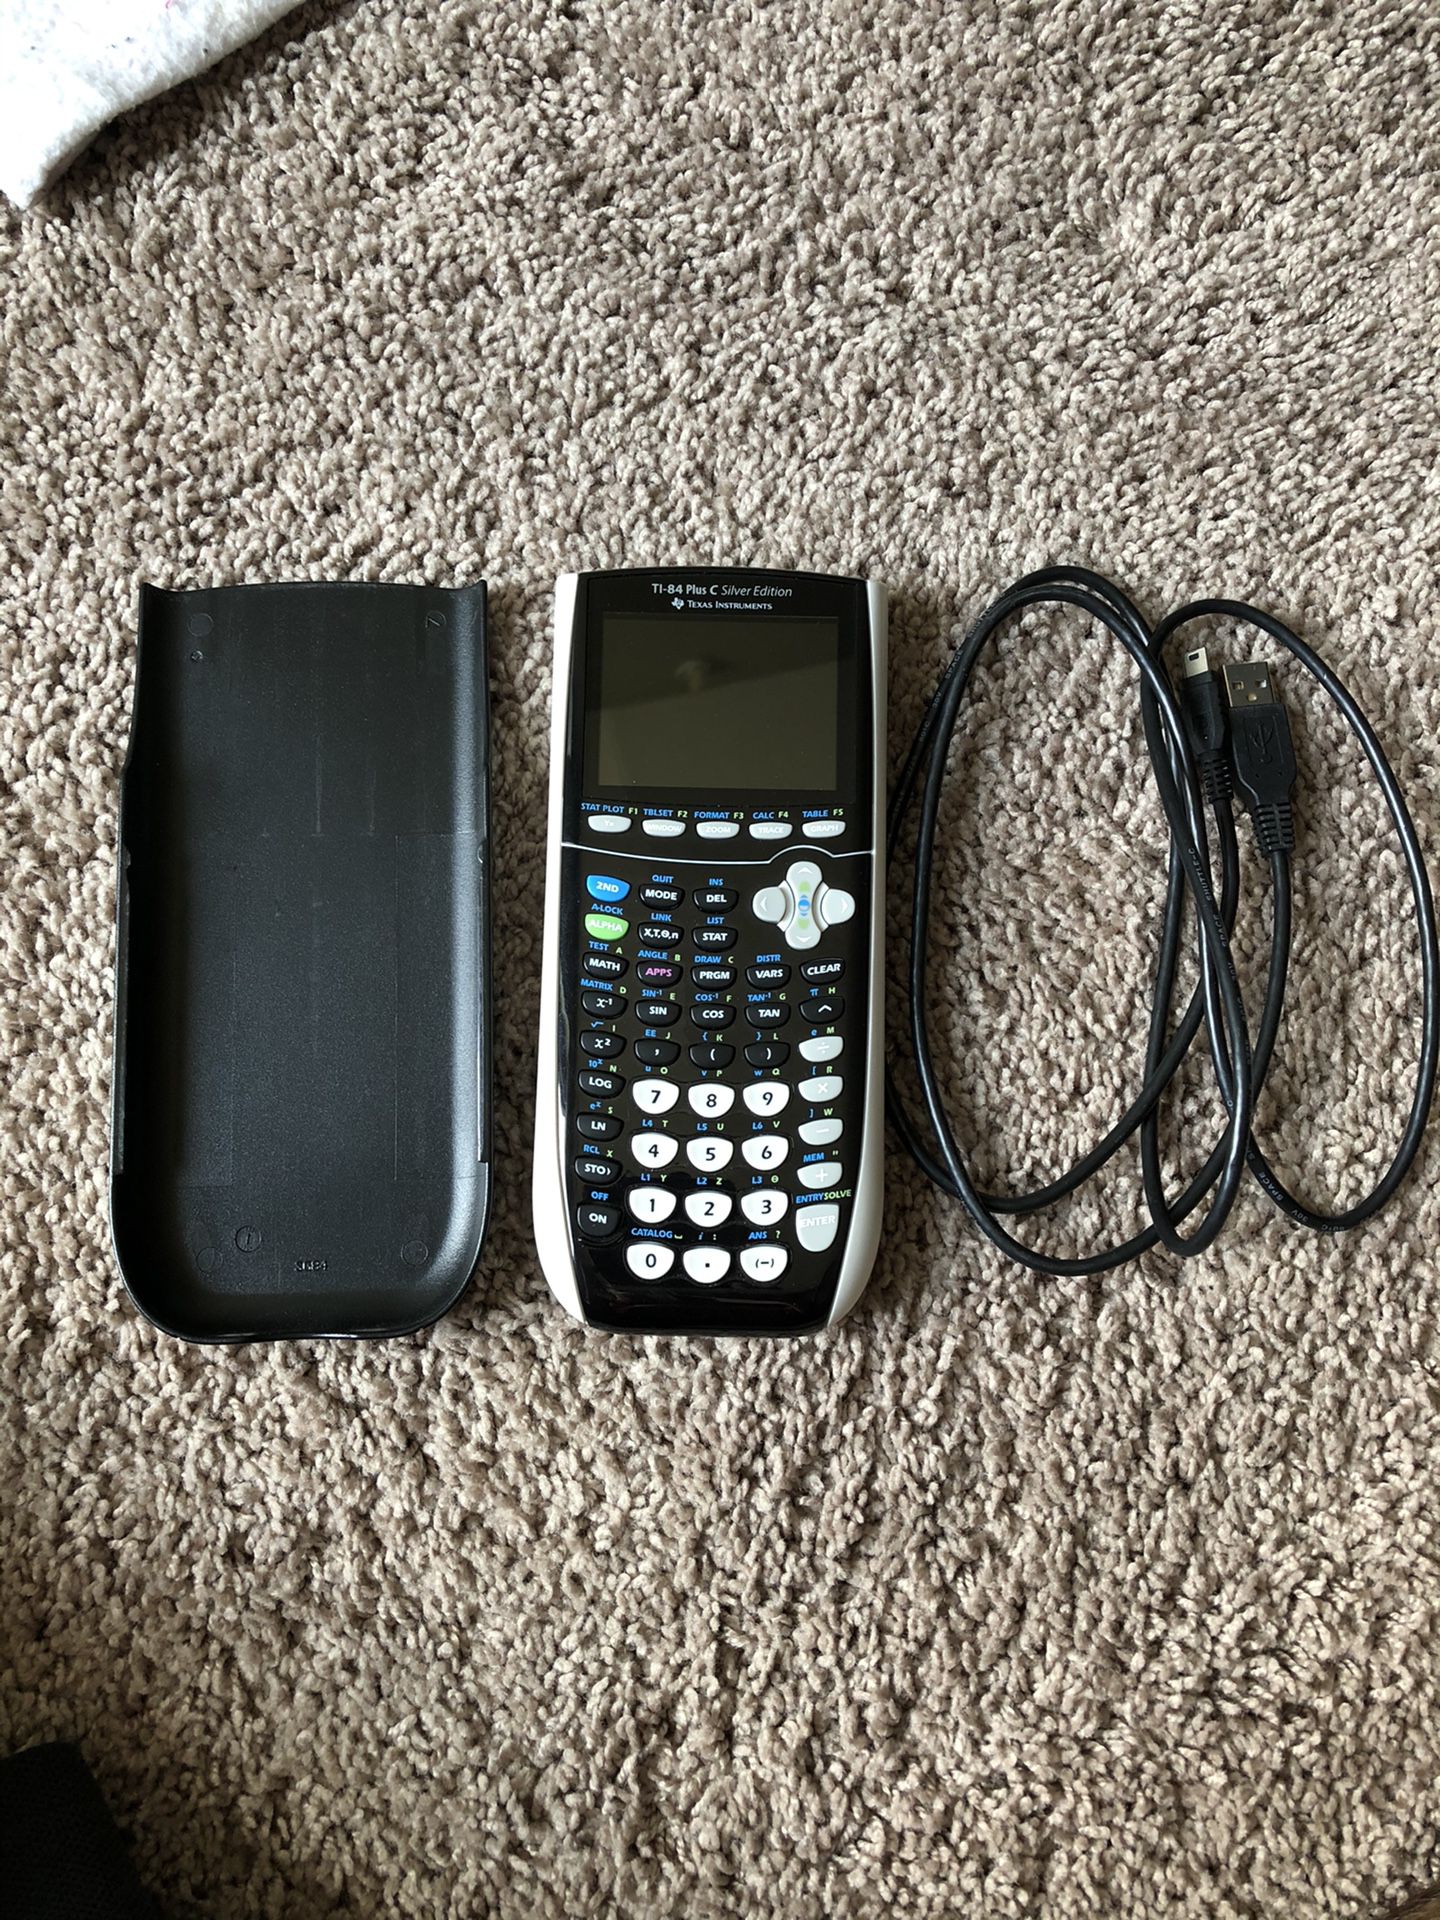 ti-83 Plus Graphing Calculator